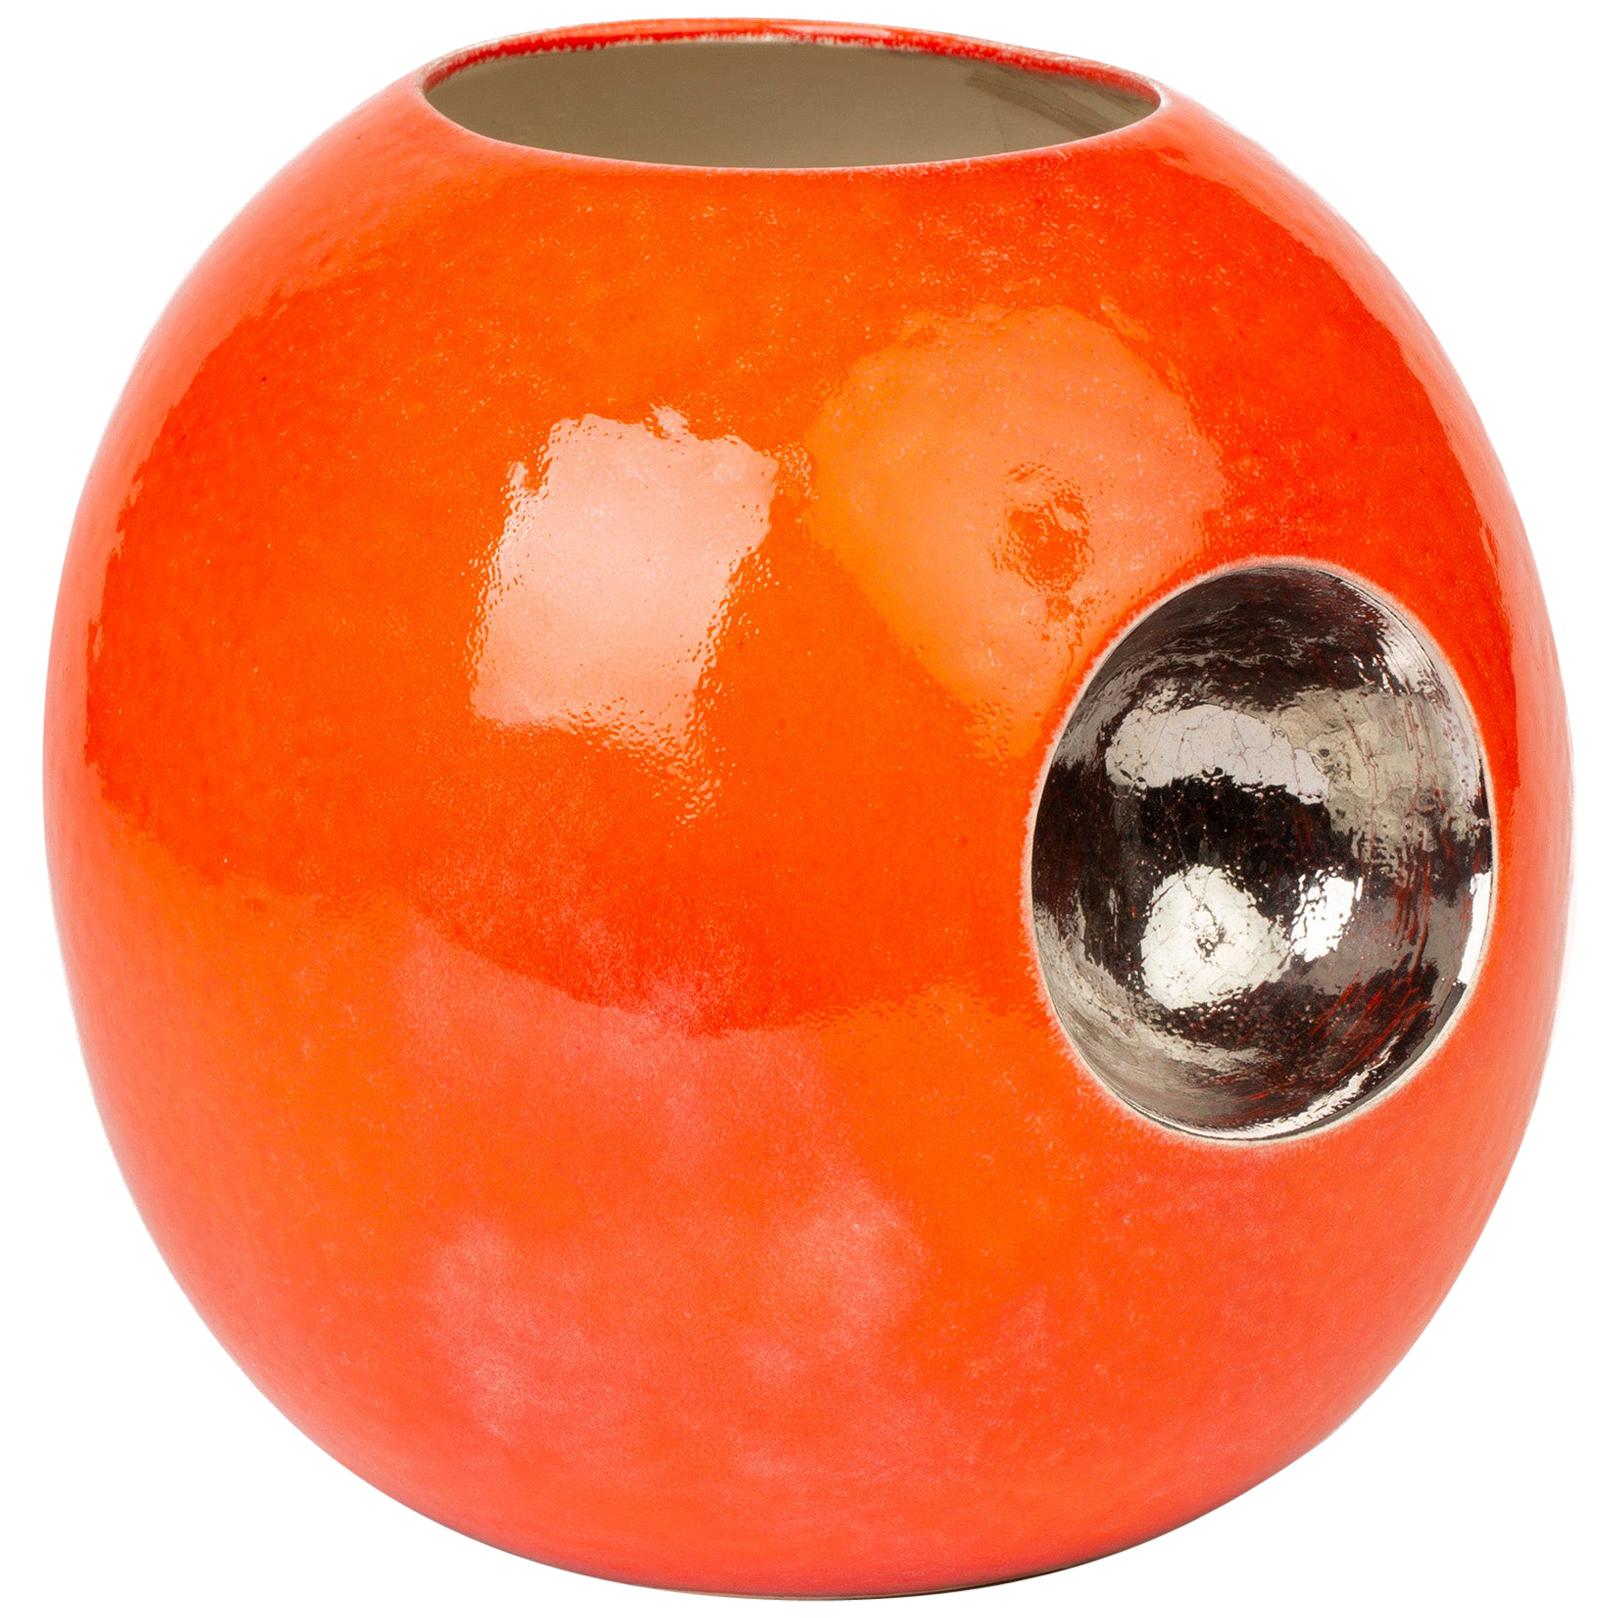 Zeitgenössische orange glasierte kugelförmige Vase, signiert Morgan, datiert 2004